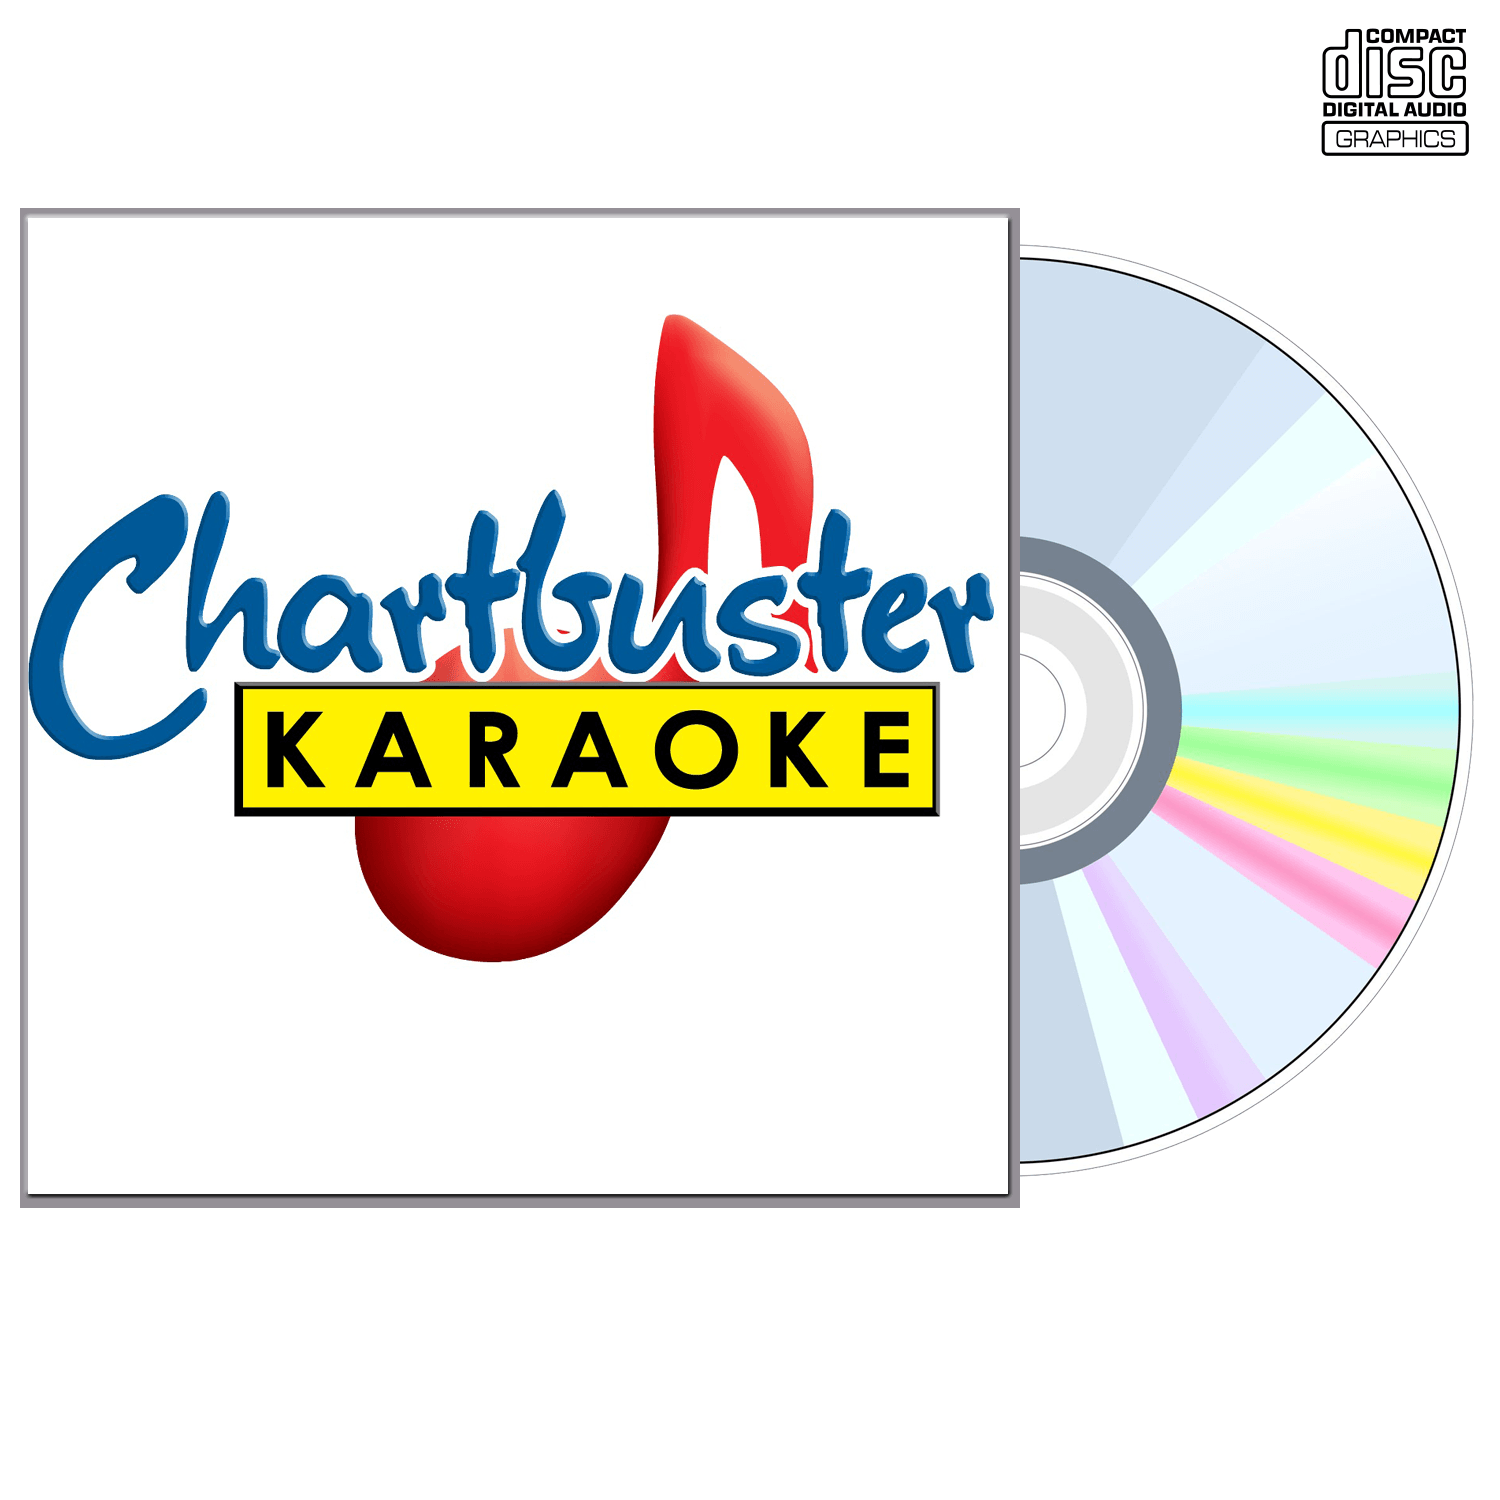 Ultimate 90's Collection Vol 16 - CD+G - Chartbuster Karaoke - Karaoke Home Entertainment